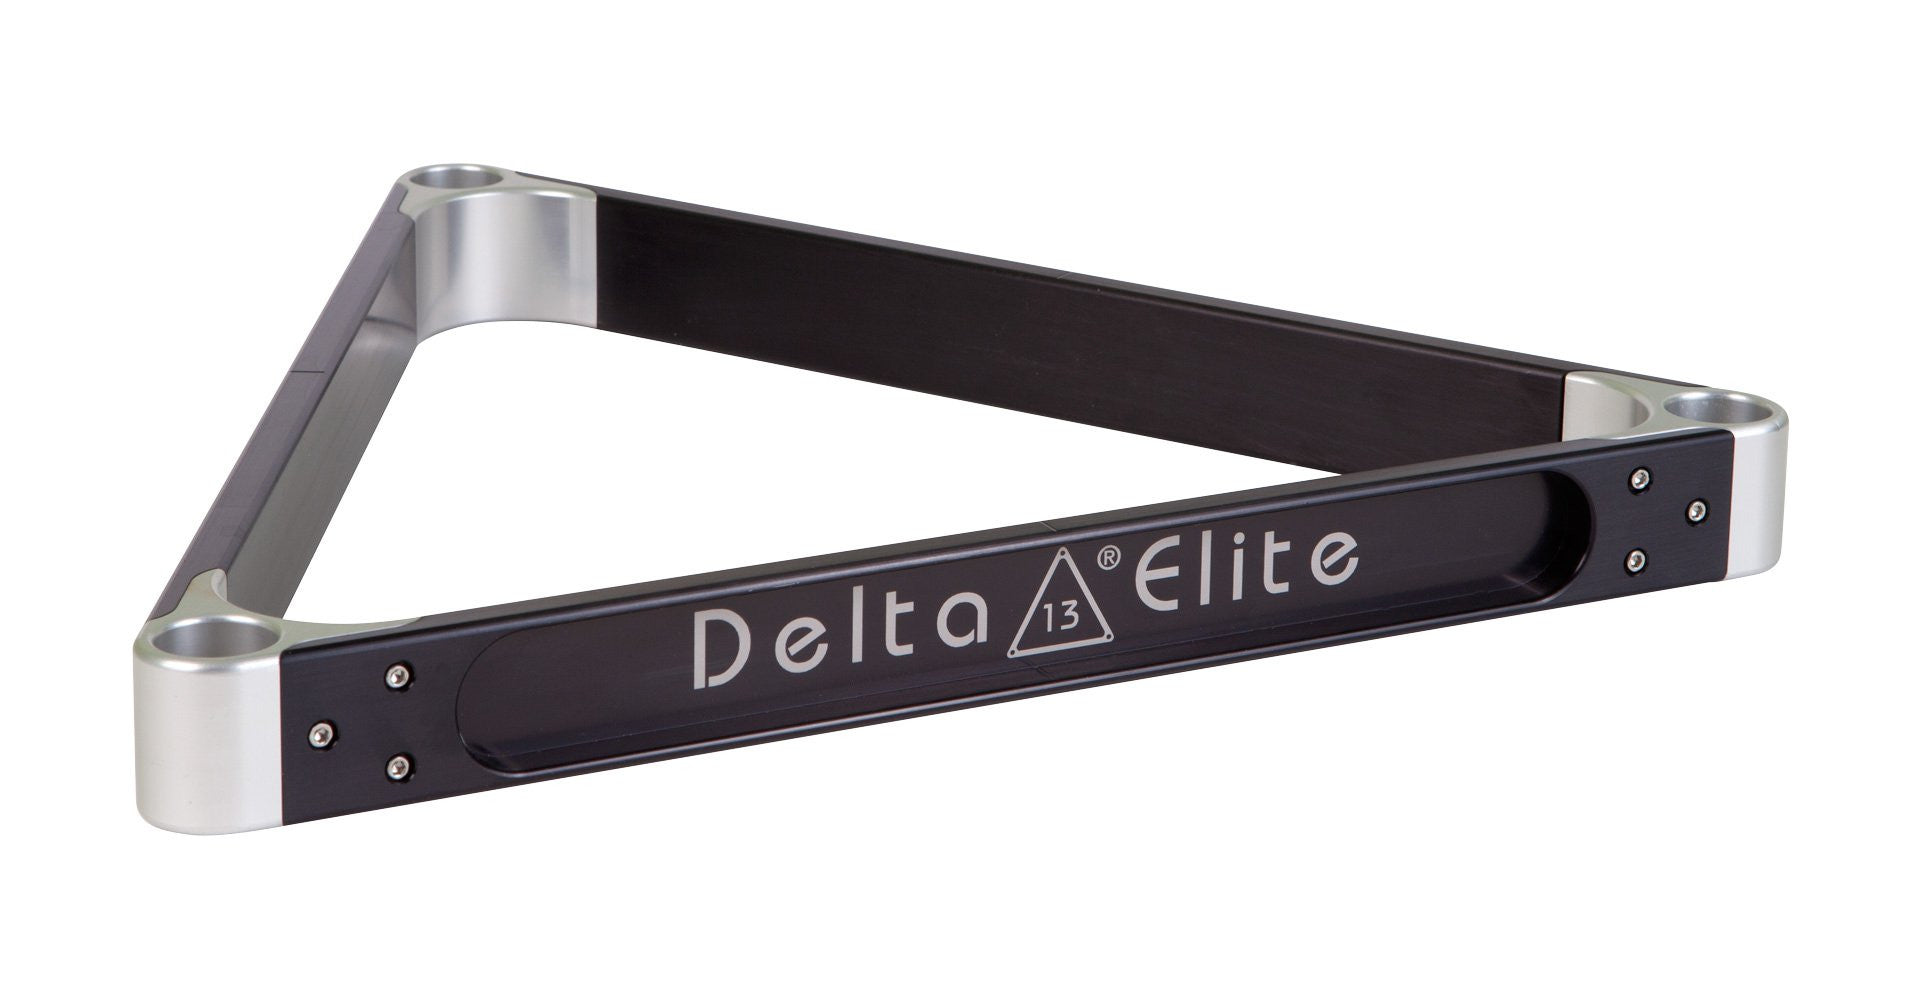 Delta-13 Elite - Delta-13 - 1